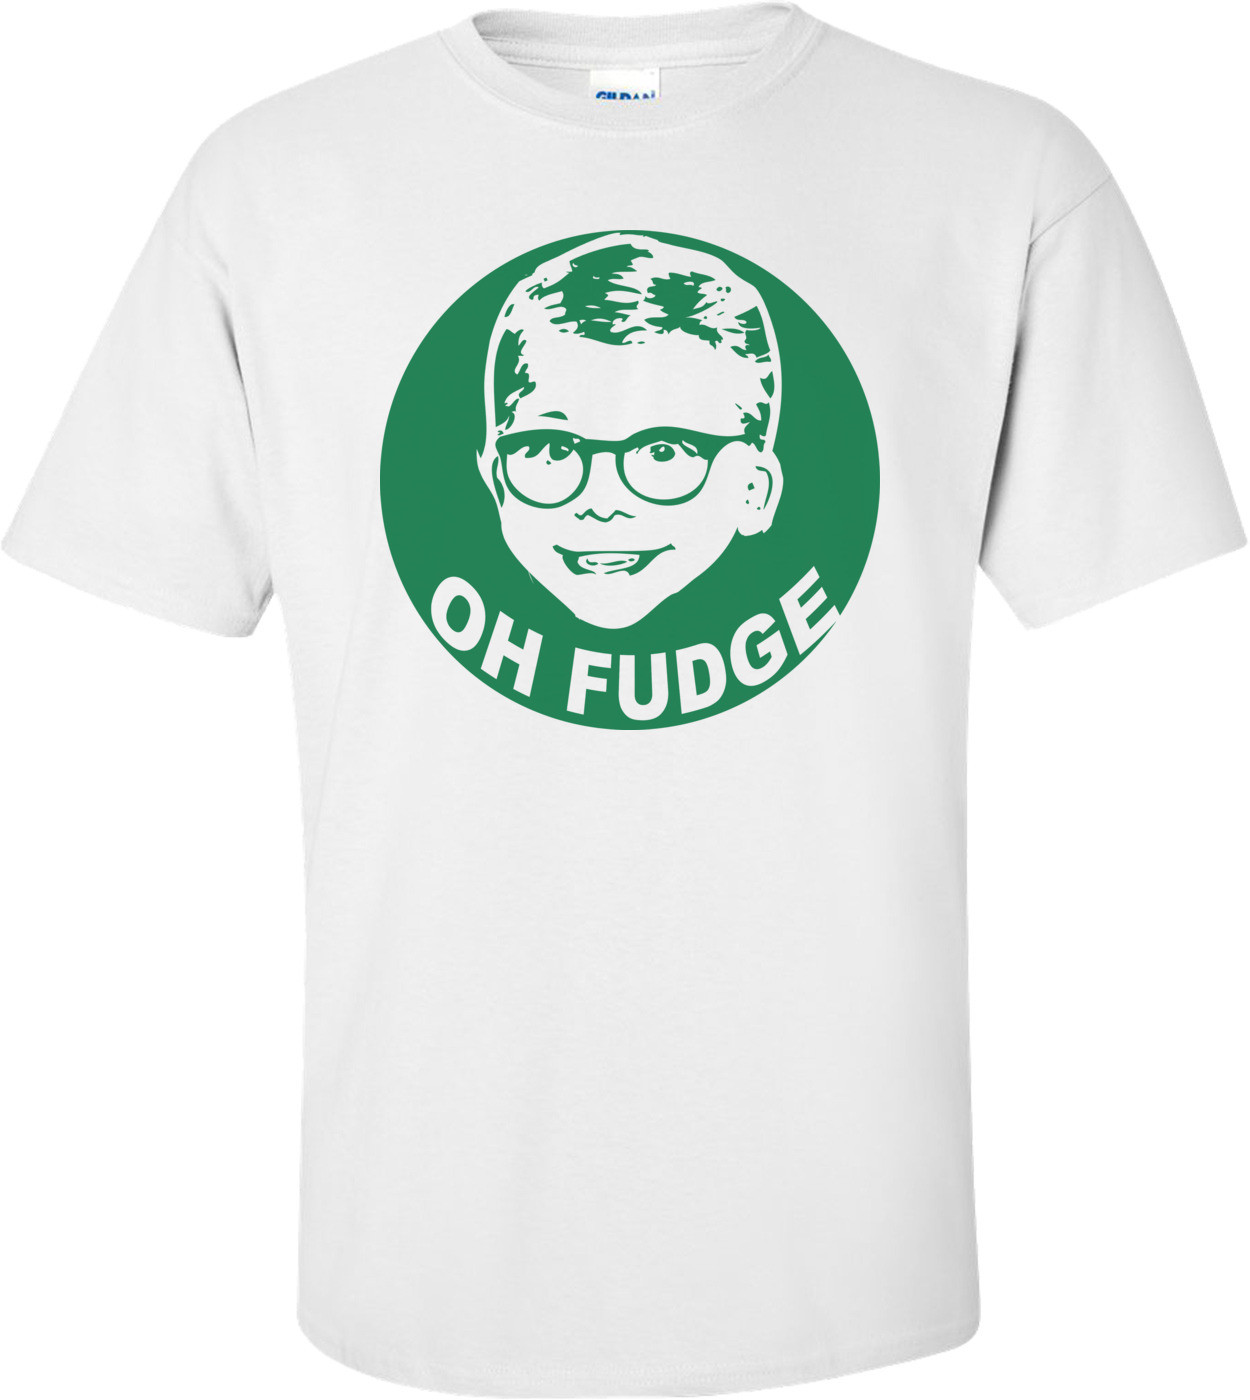 Oh Fudge - A Christmas Story Shirt